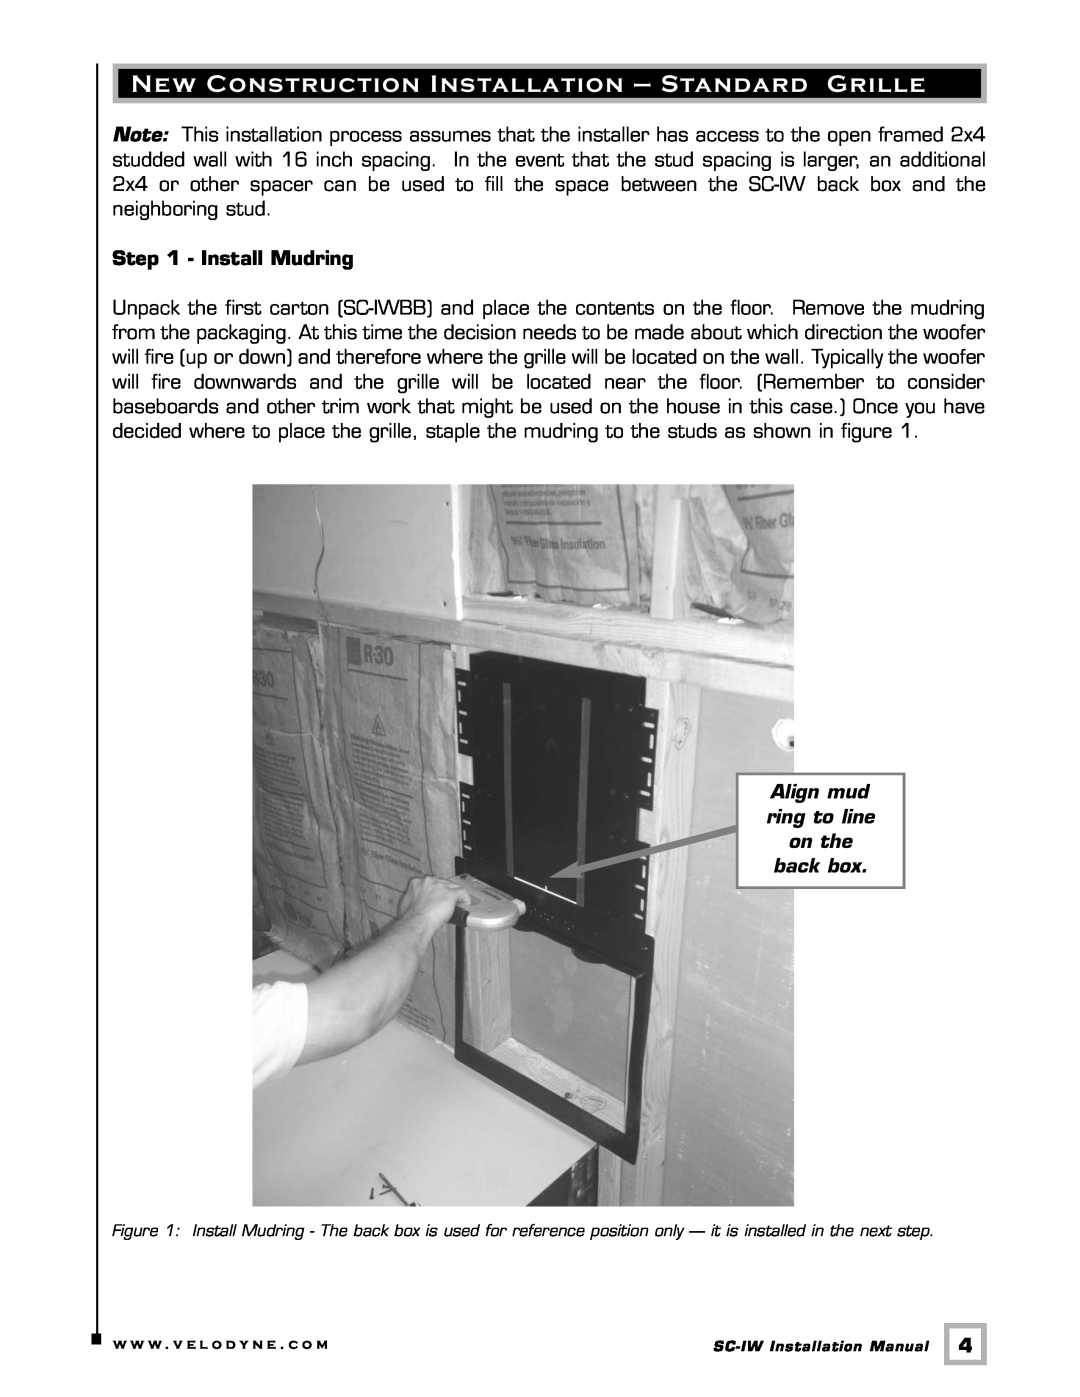 Velodyne Acoustics SC-IW installation manual New Construction Installation - Standard Grille, Install Mudring 